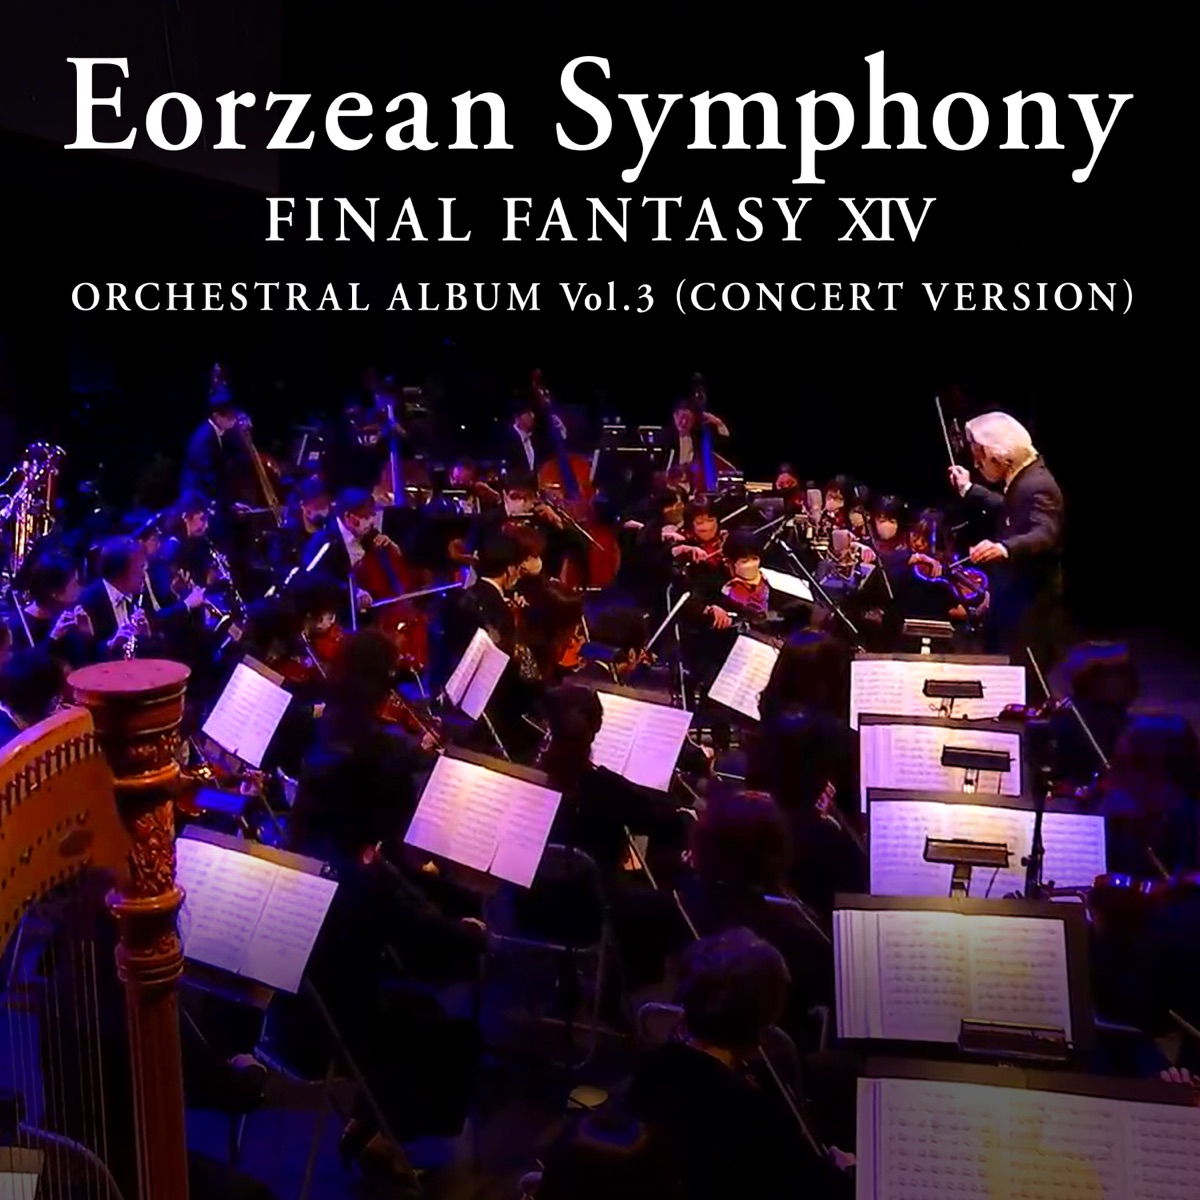 Eorzean Symphony: FINAL FANTASY XIV Orchestral Album Vol. (Concert  version) by Masayoshi Soken on iTunes